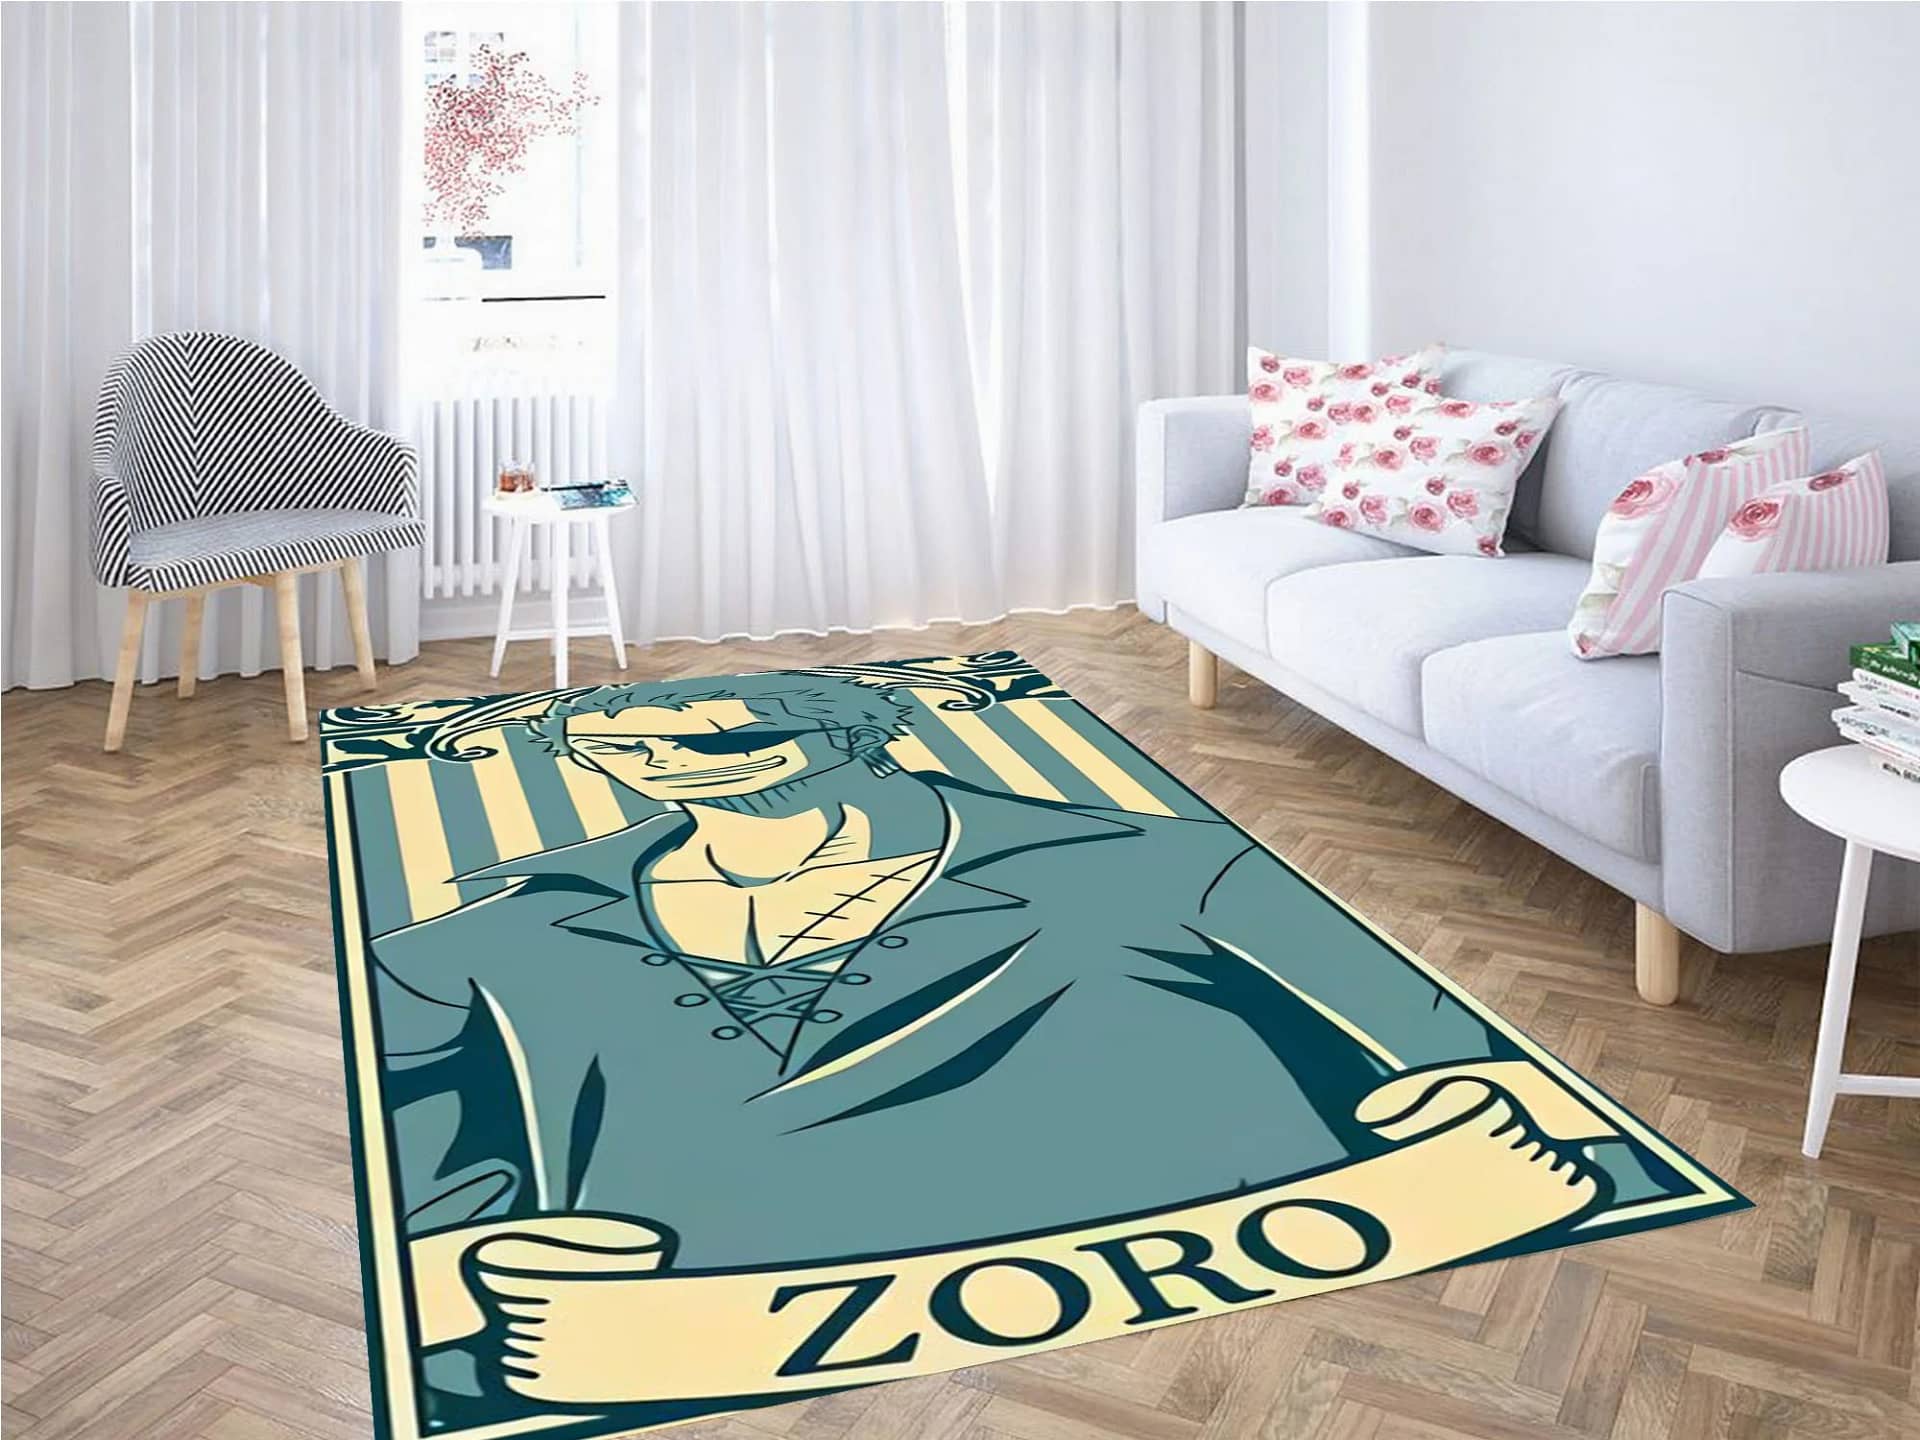 One Piece Zoro Background Carpet Rug